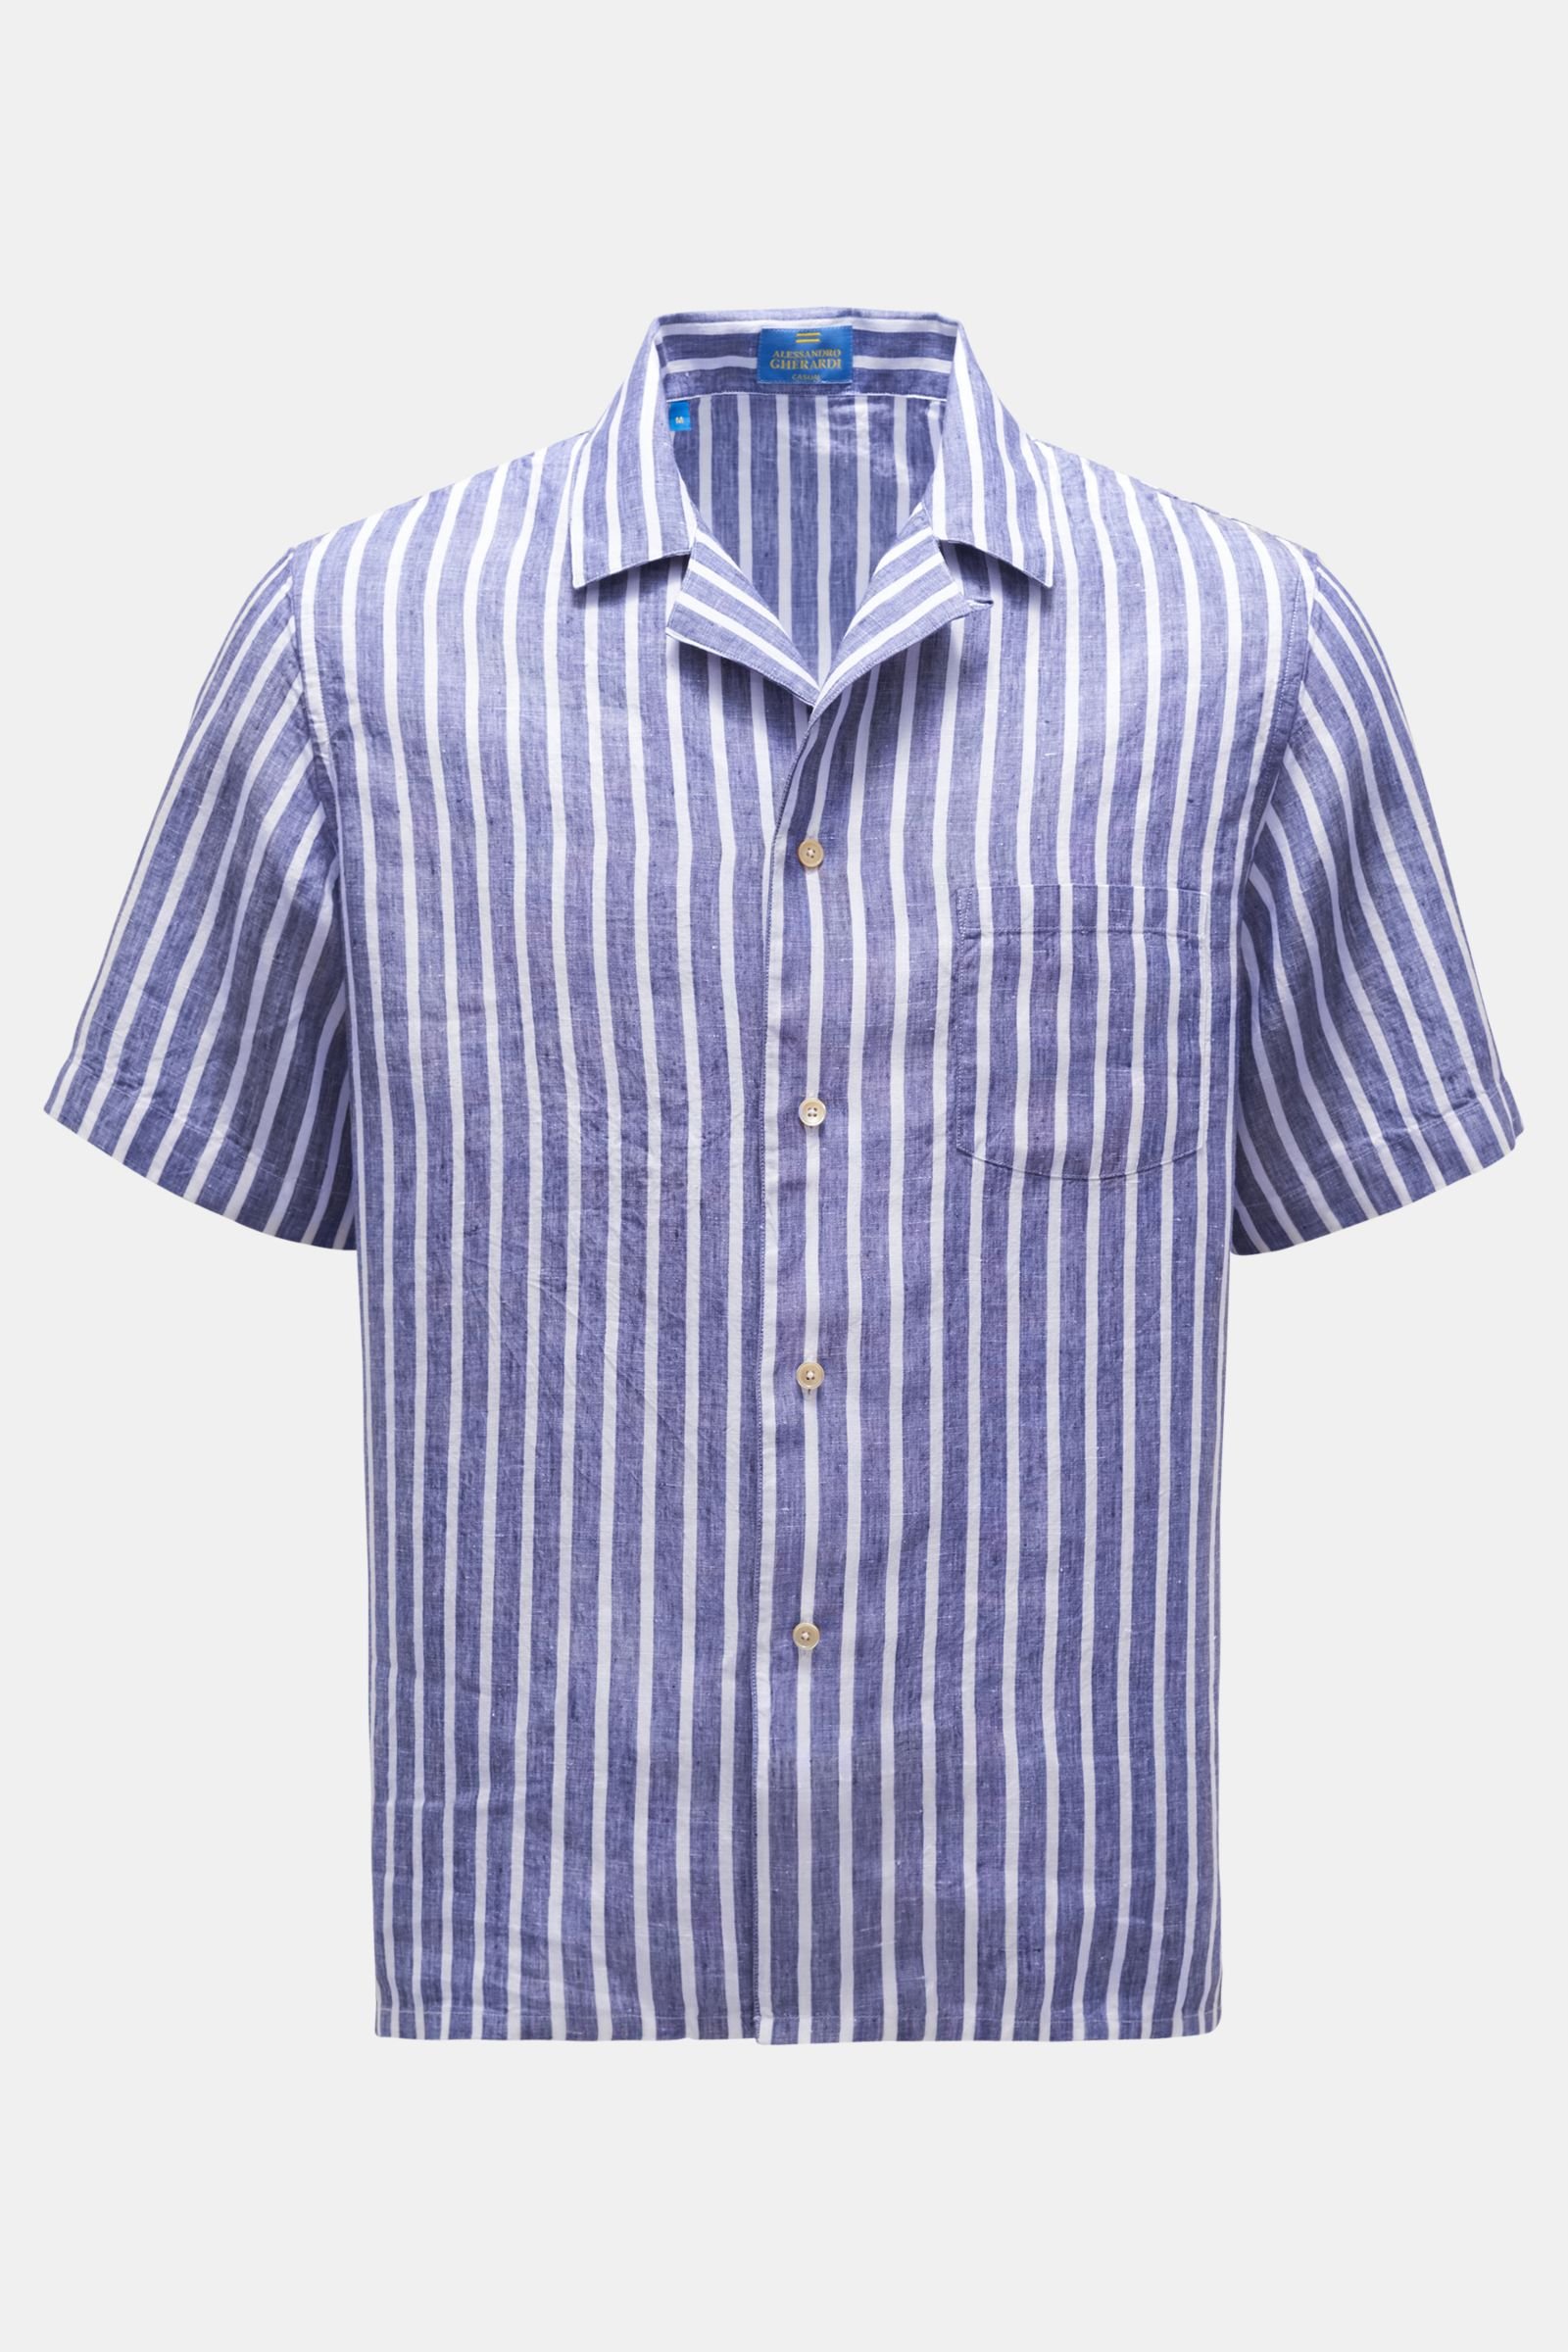 Linen short sleeve shirt 'Miami' Cuban collar navy/white striped